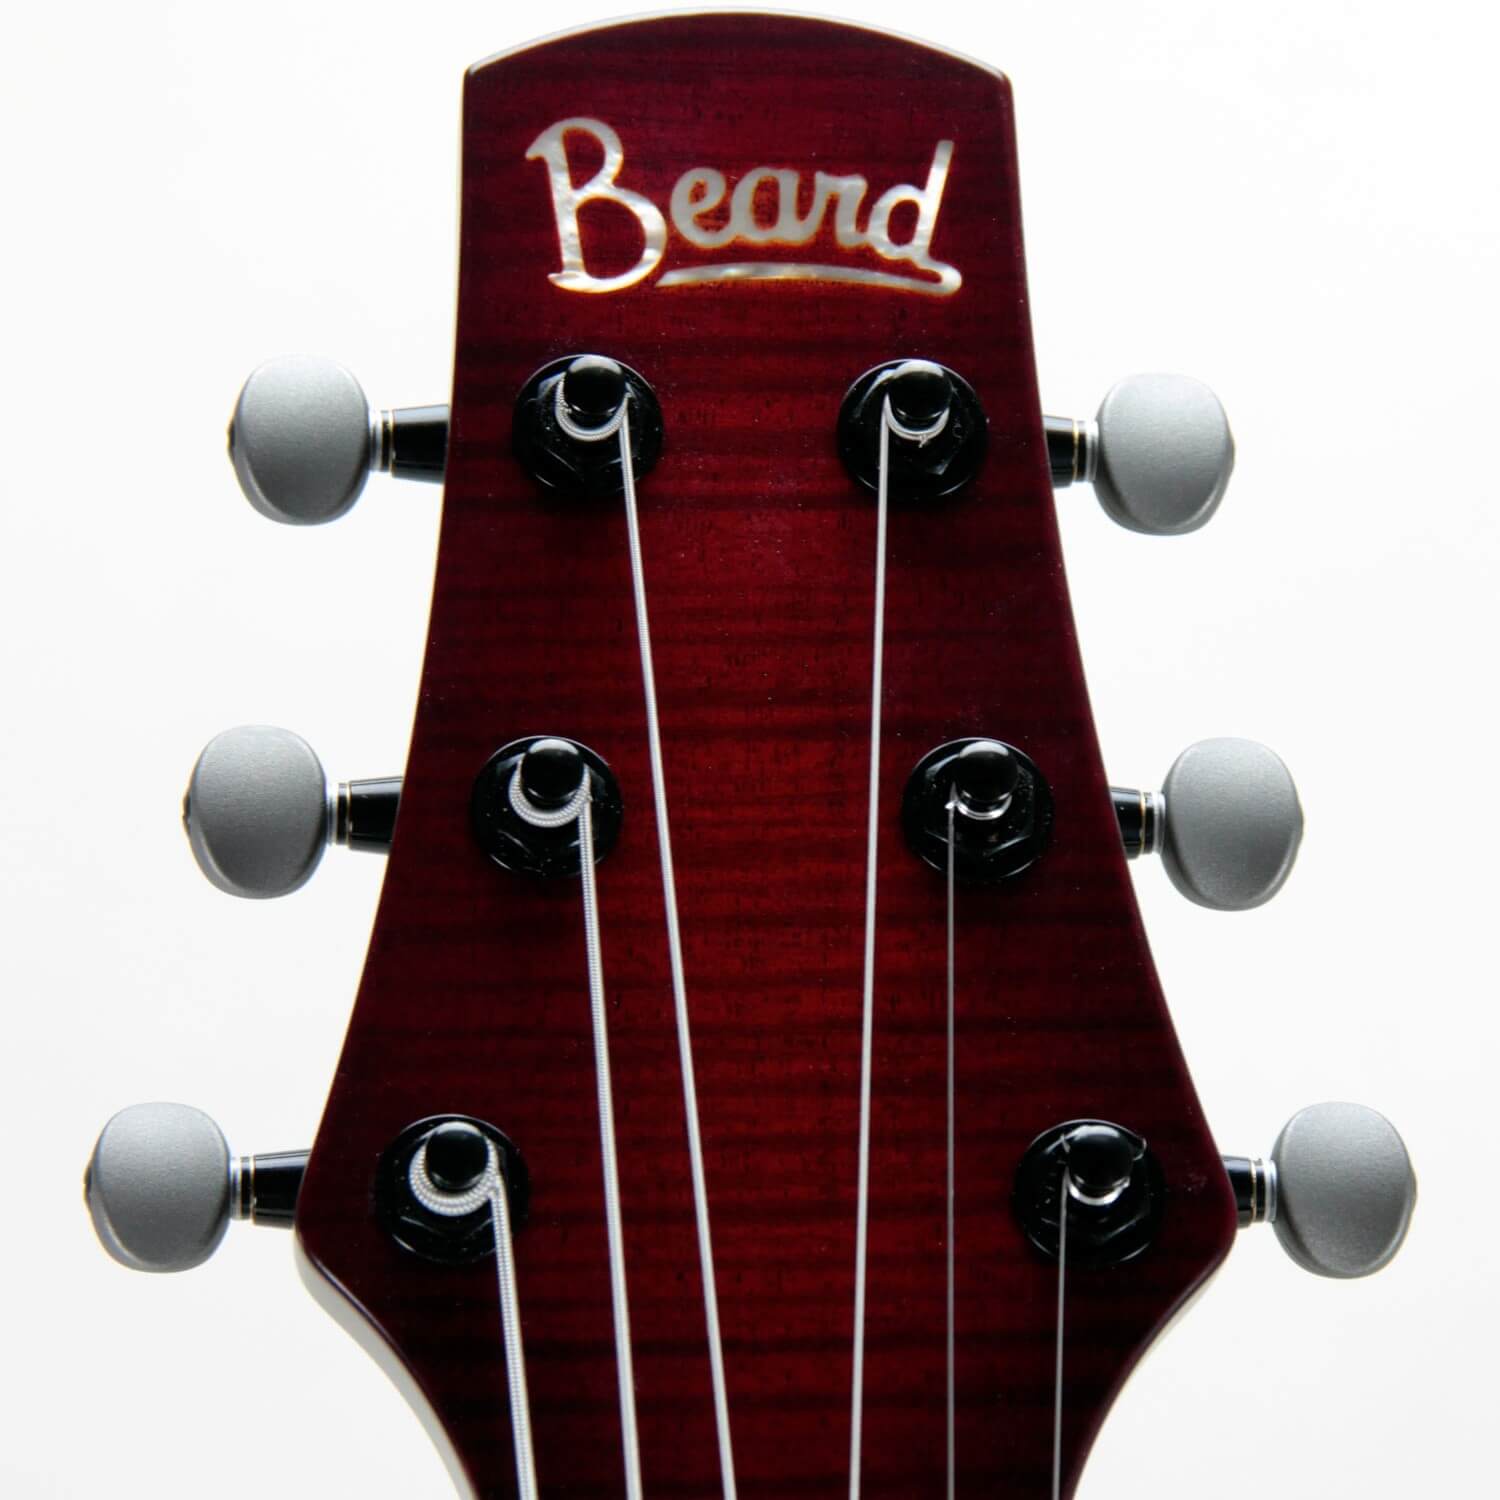 Josh-Swift – Beard Guitars